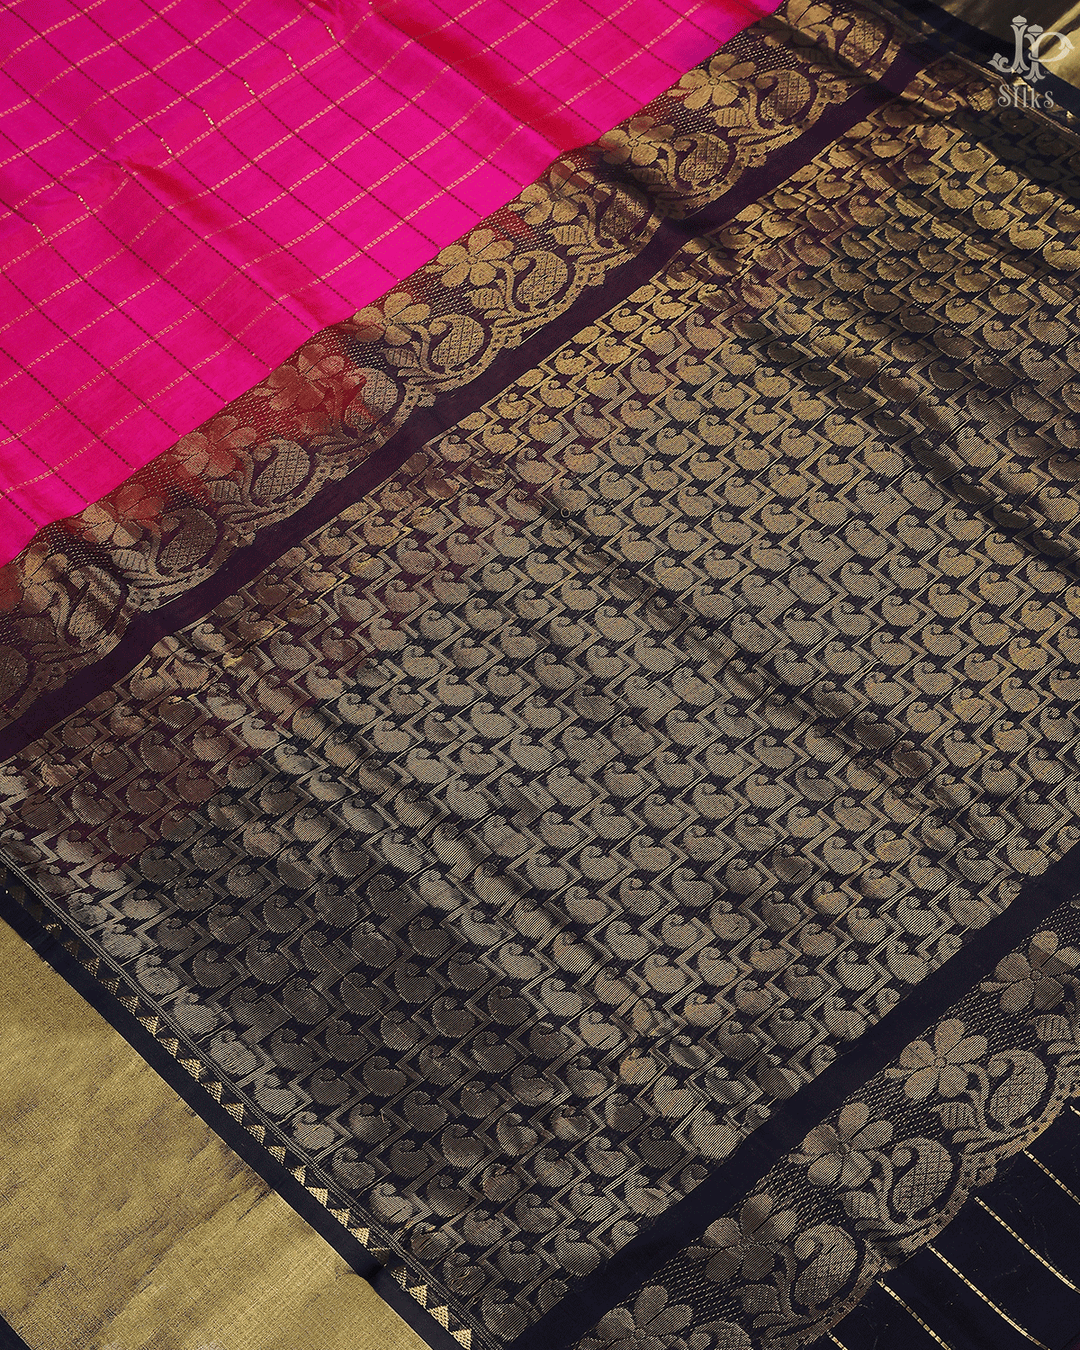 Rani Pink and Navy Blue Silk Cotton Saree - A4956 - View 5